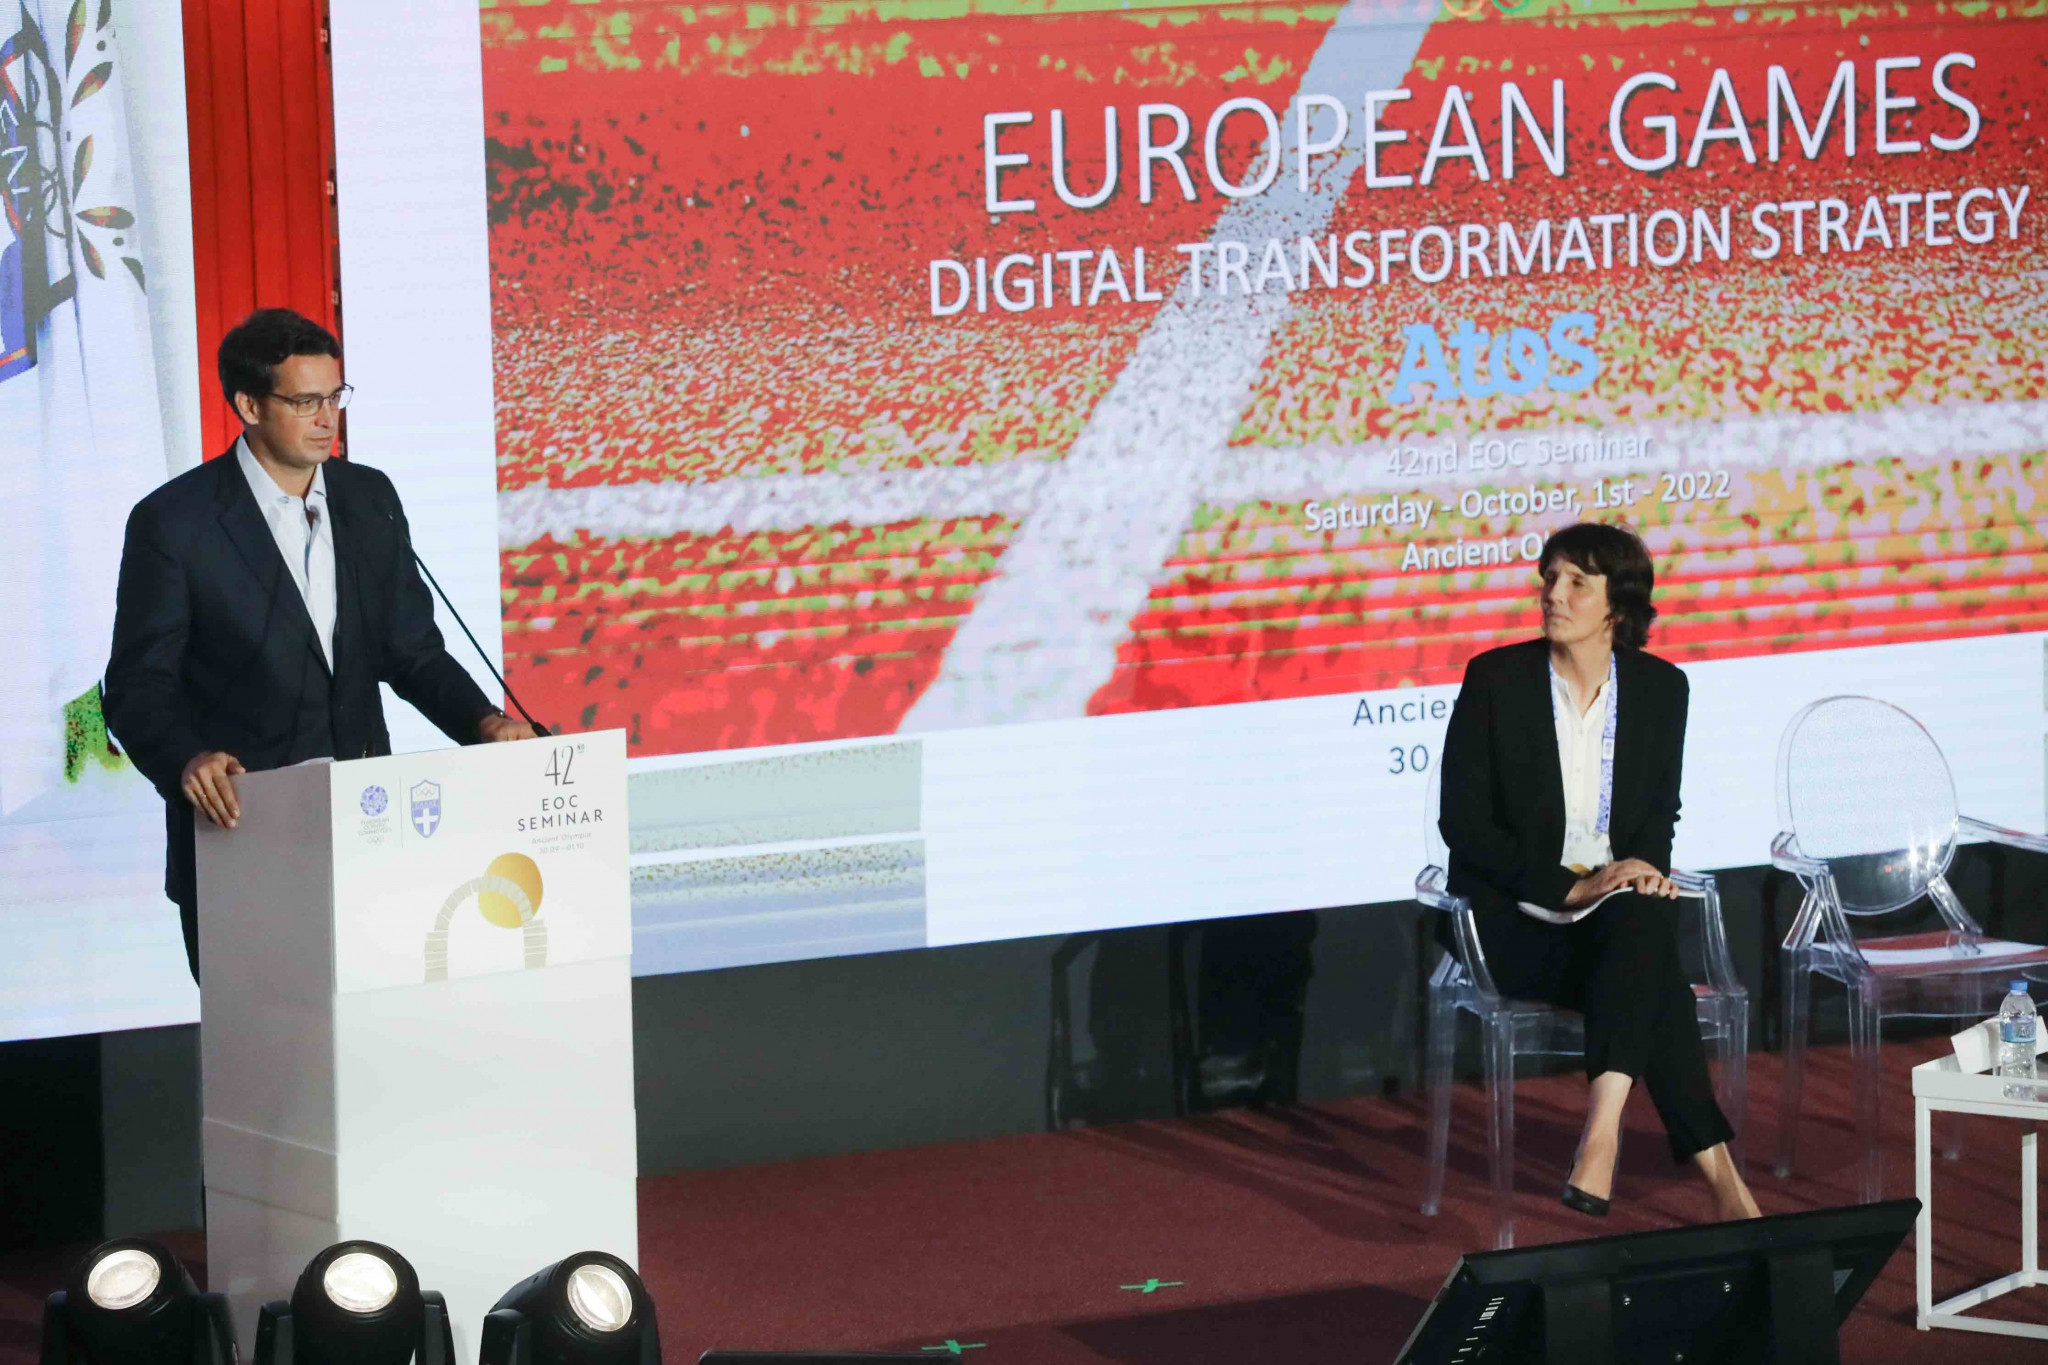 EOC urged to embrace "digital disruption" to make European Games "relevant"